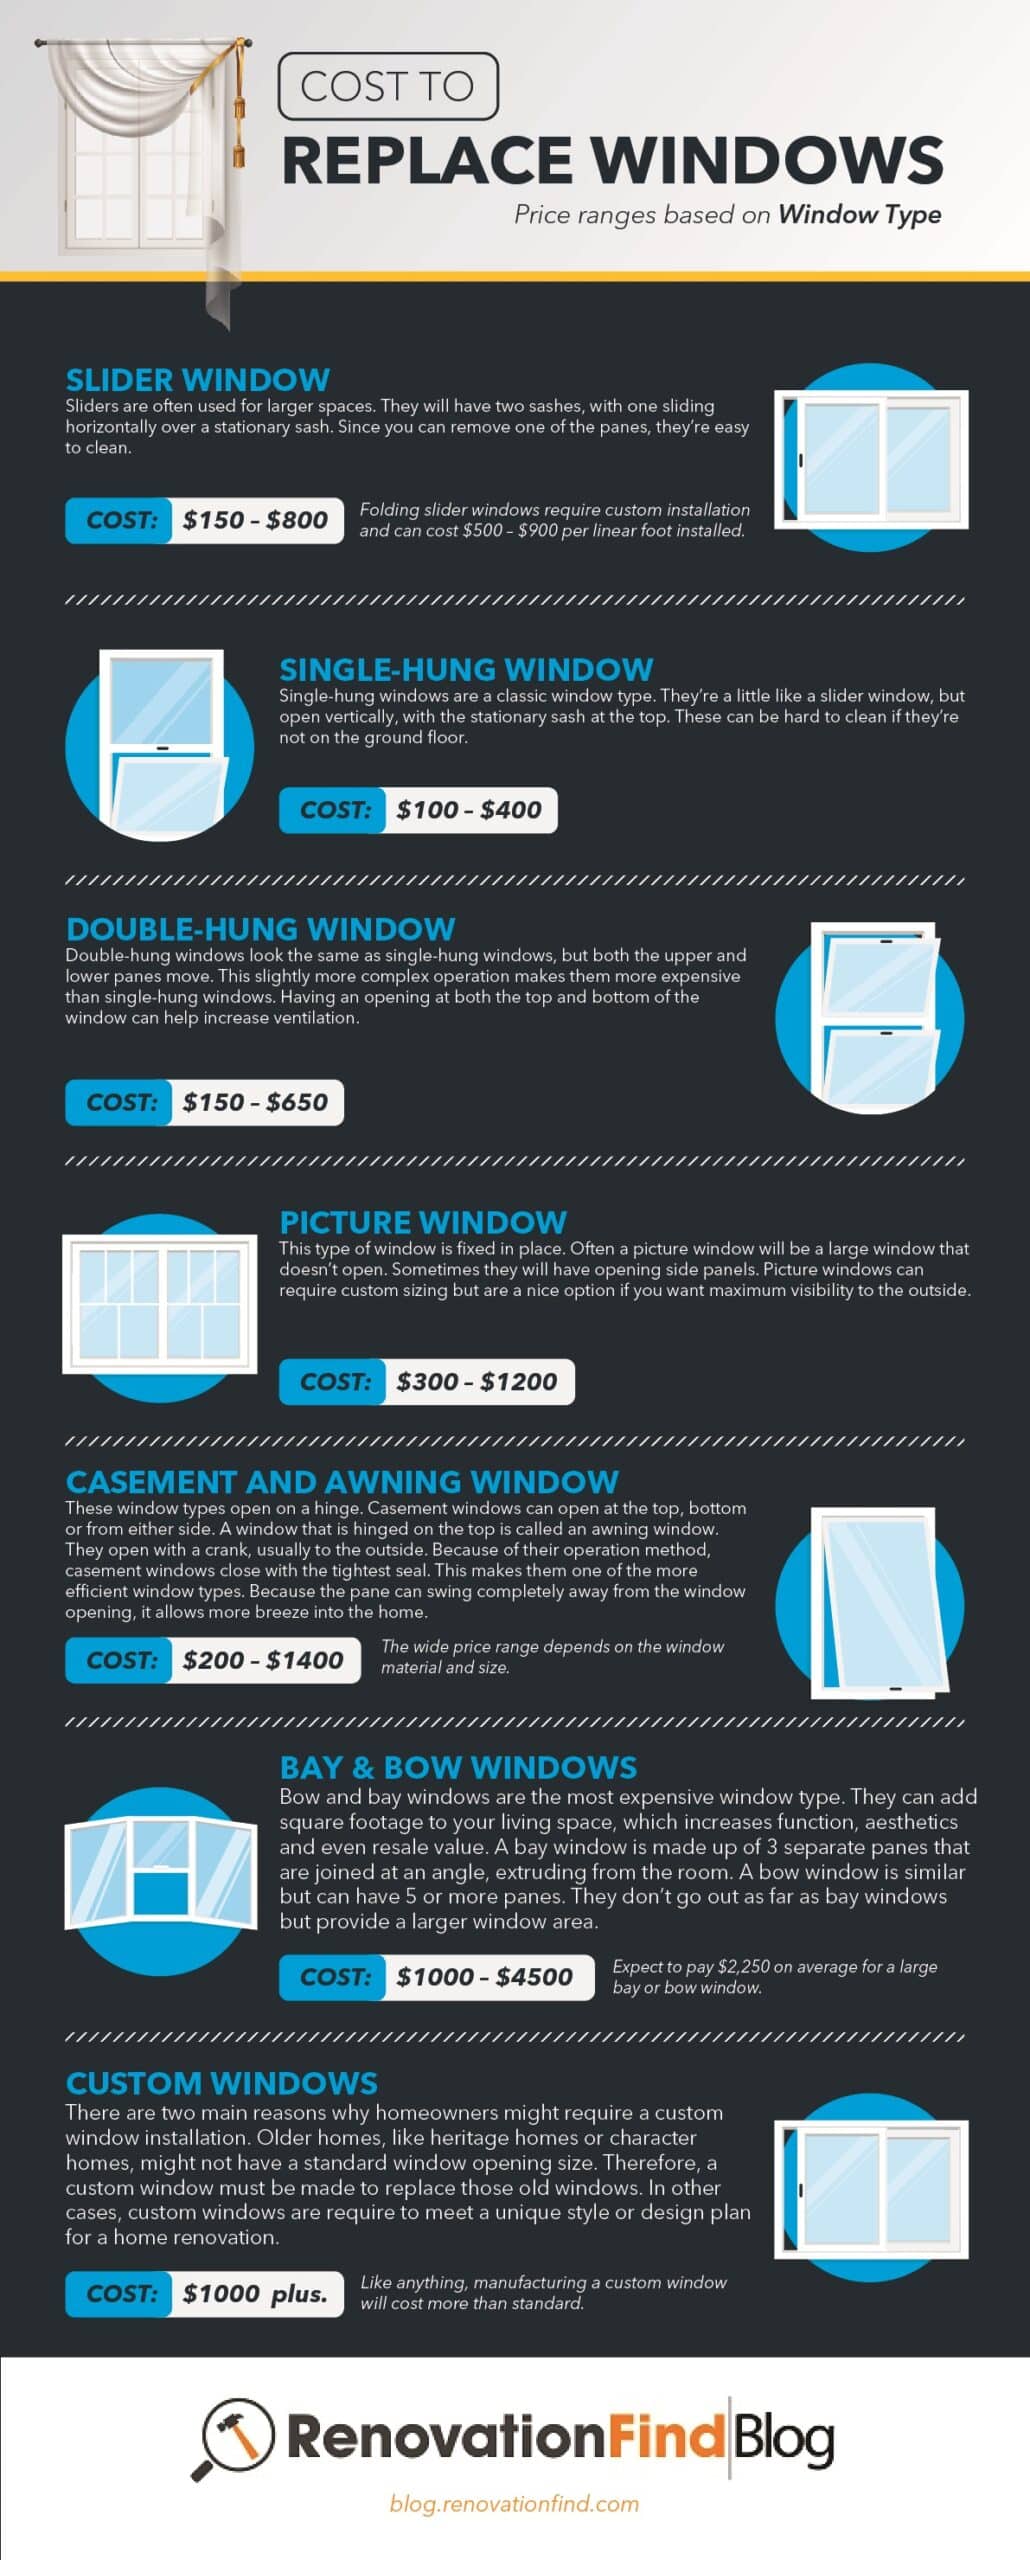 Cost of windows based on window type